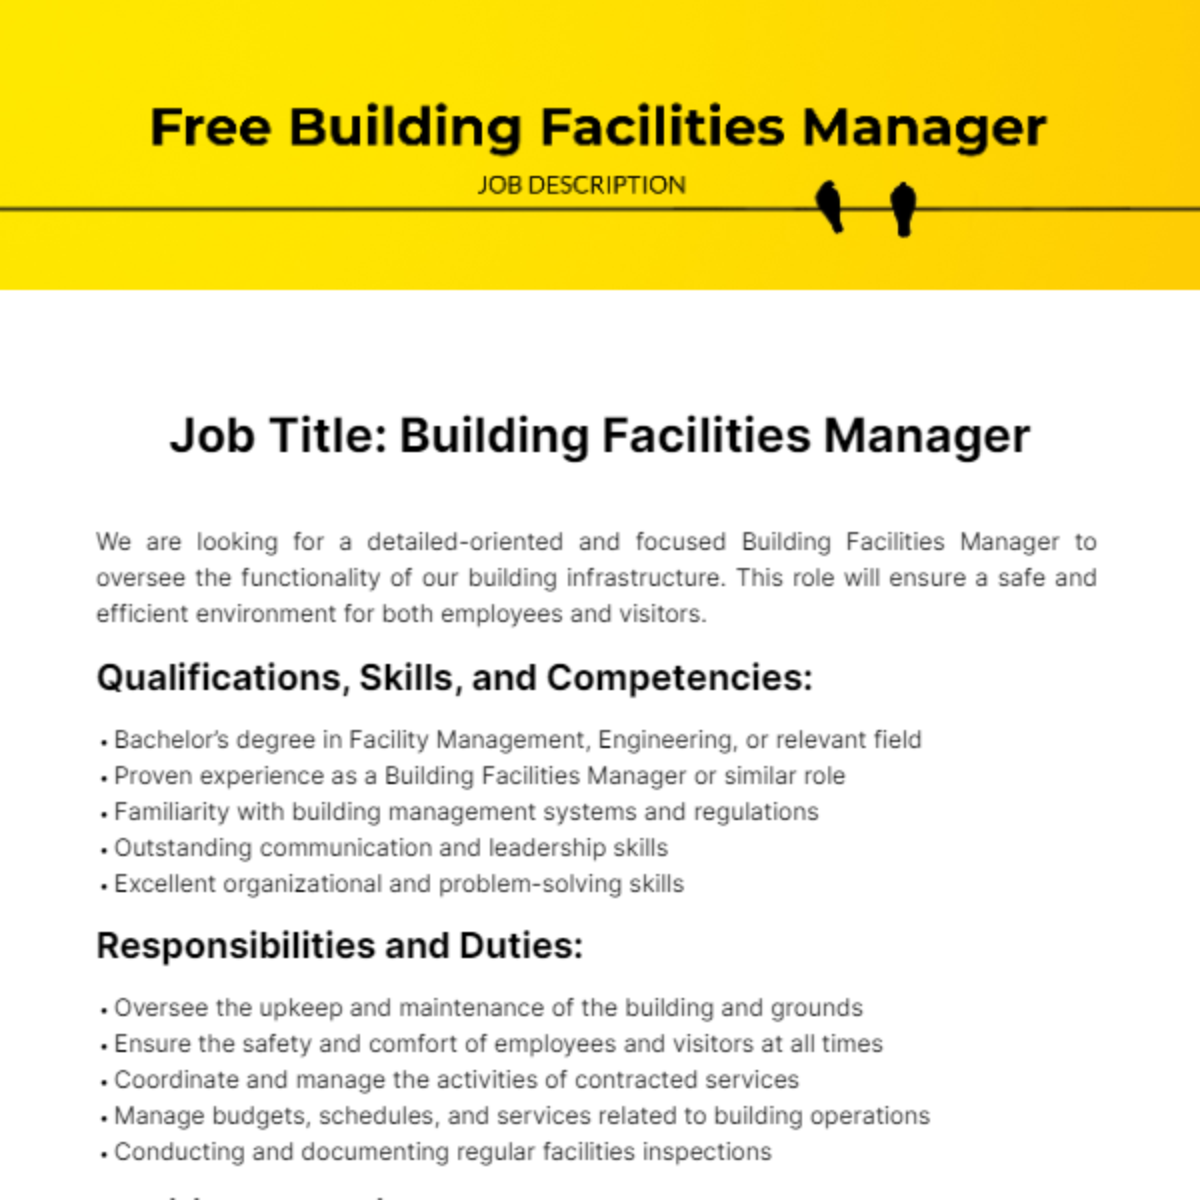 Free Building Facilities Manager Job Description Template